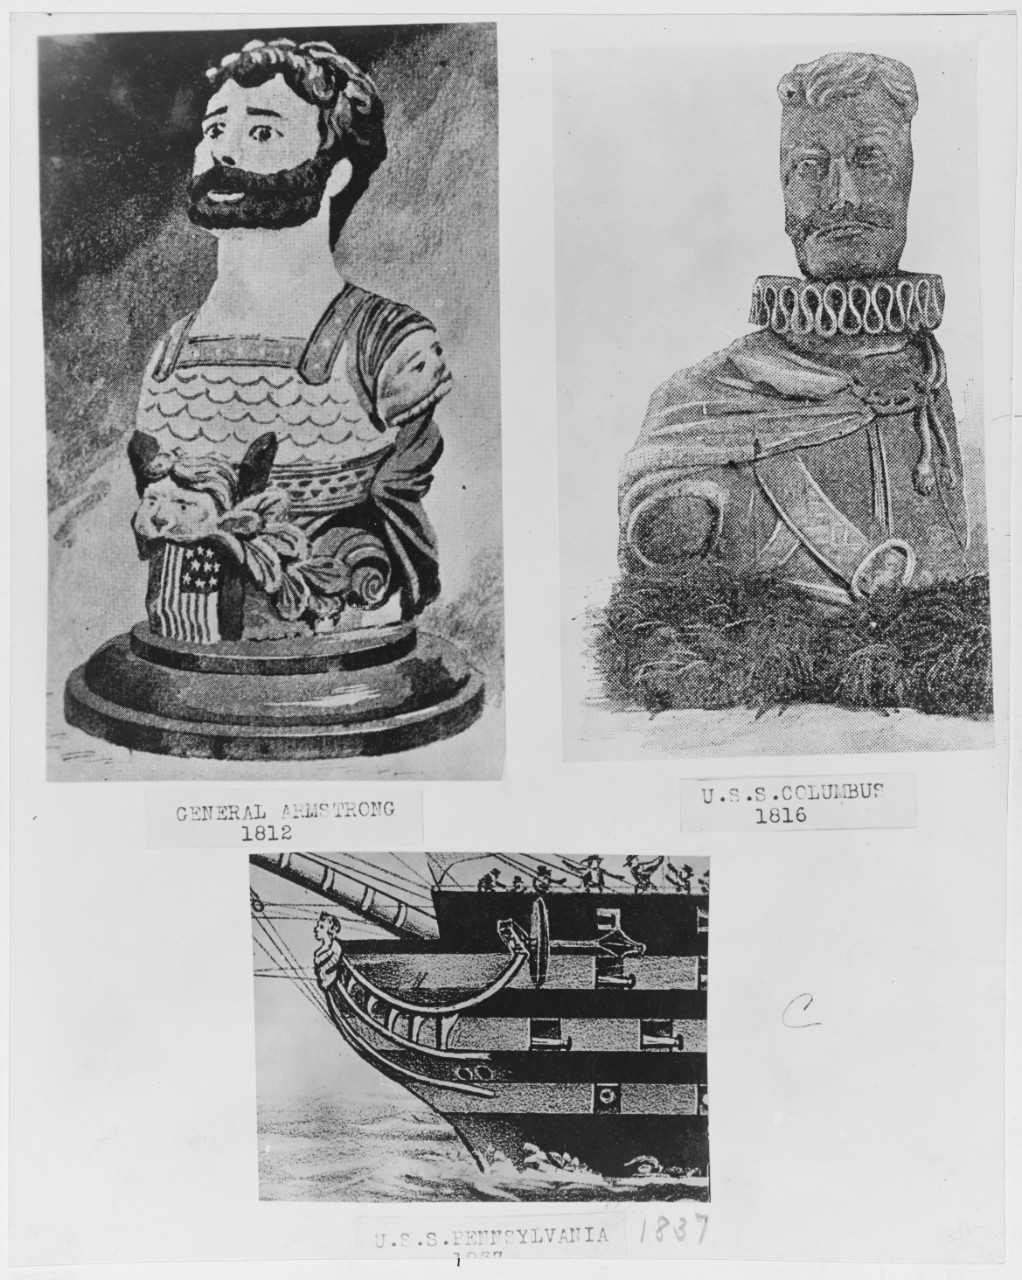 Figureheads: GENERAL ARMSTRONG (1812), USS COLUMBUS (1816), and USS PENNSYLVANIA (1837)